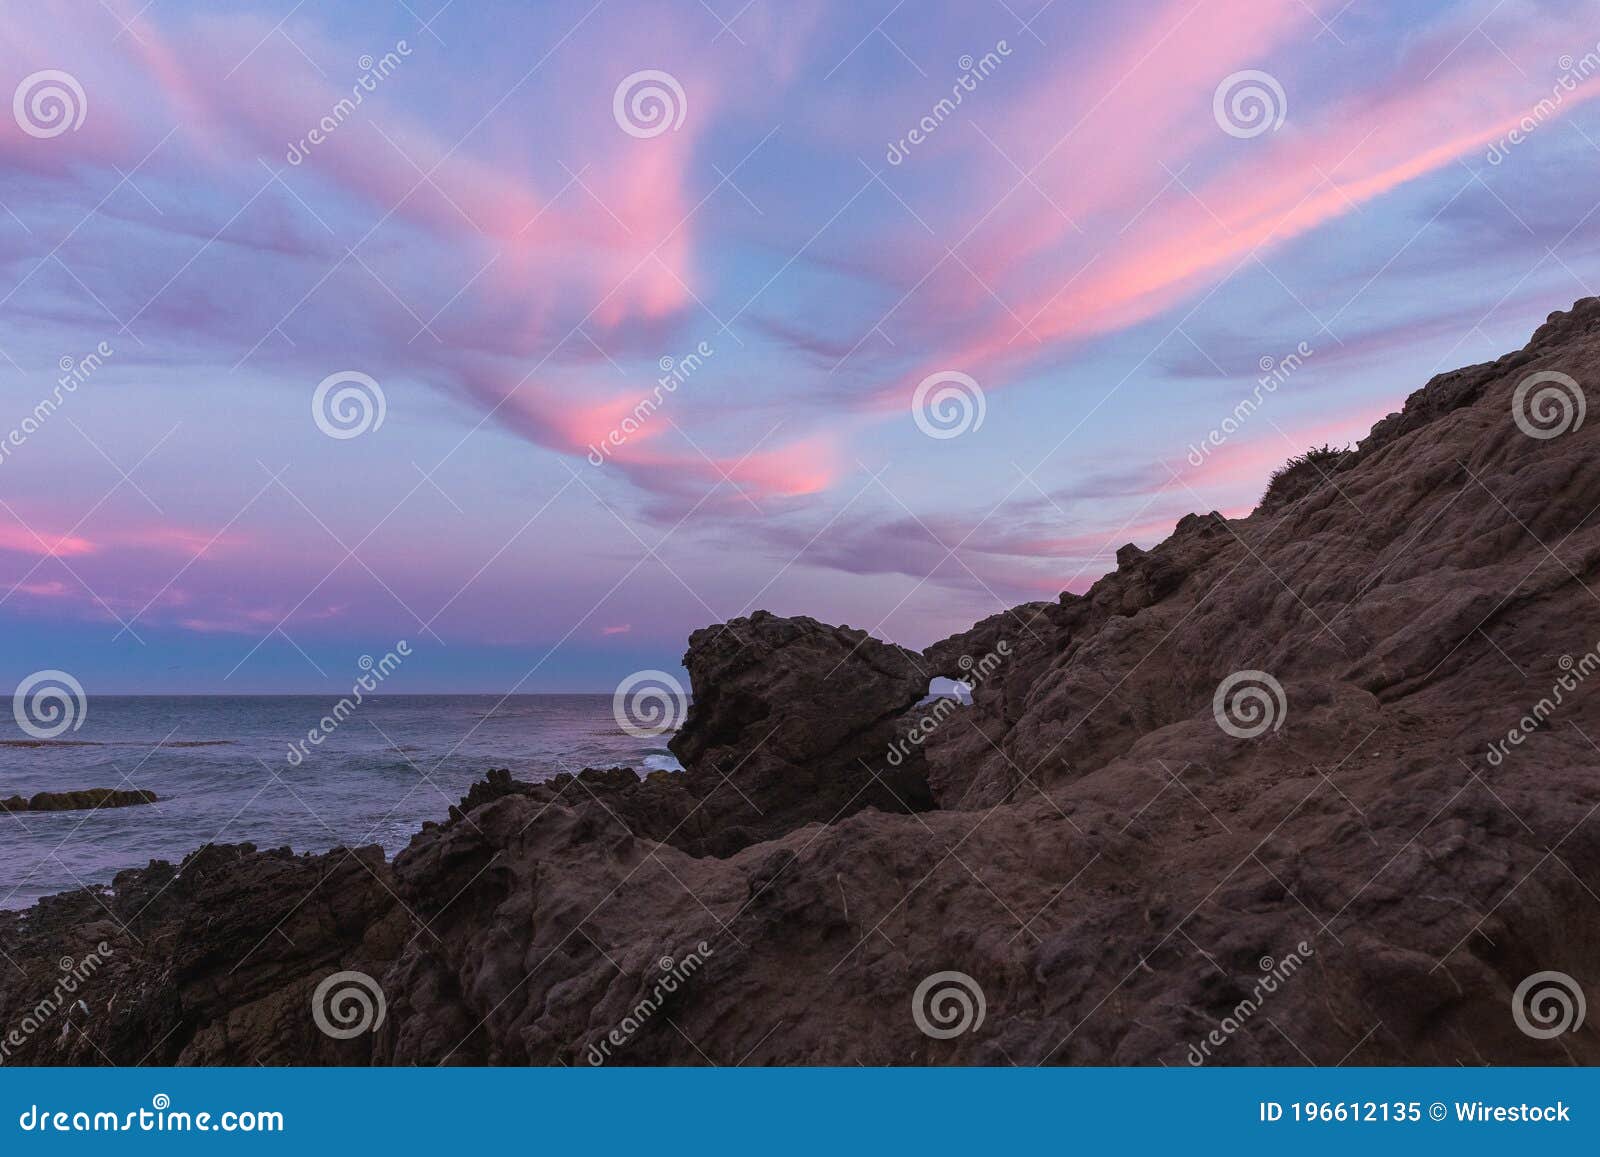 stunning shot of a beautiful skyscape from a sea coast in malibu, califonia